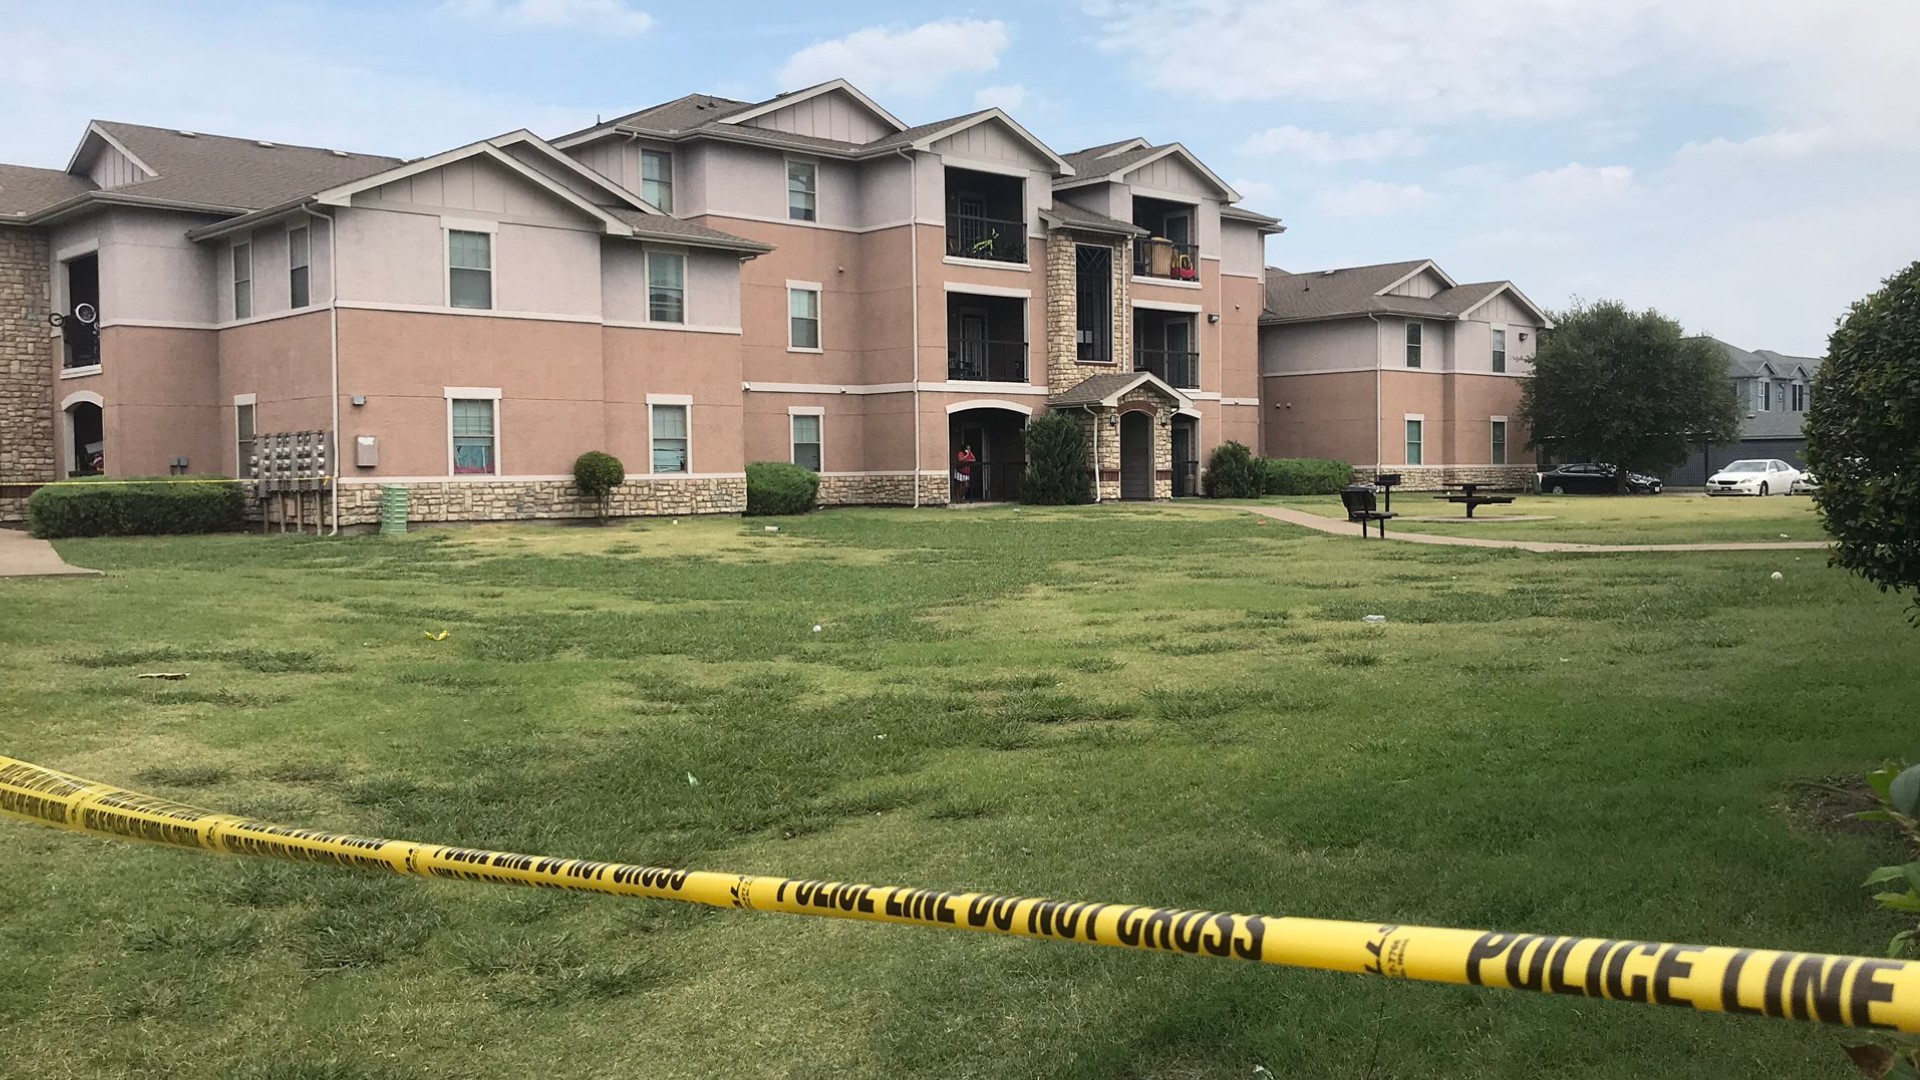 Dallas man called alarm company to say he had killed his family